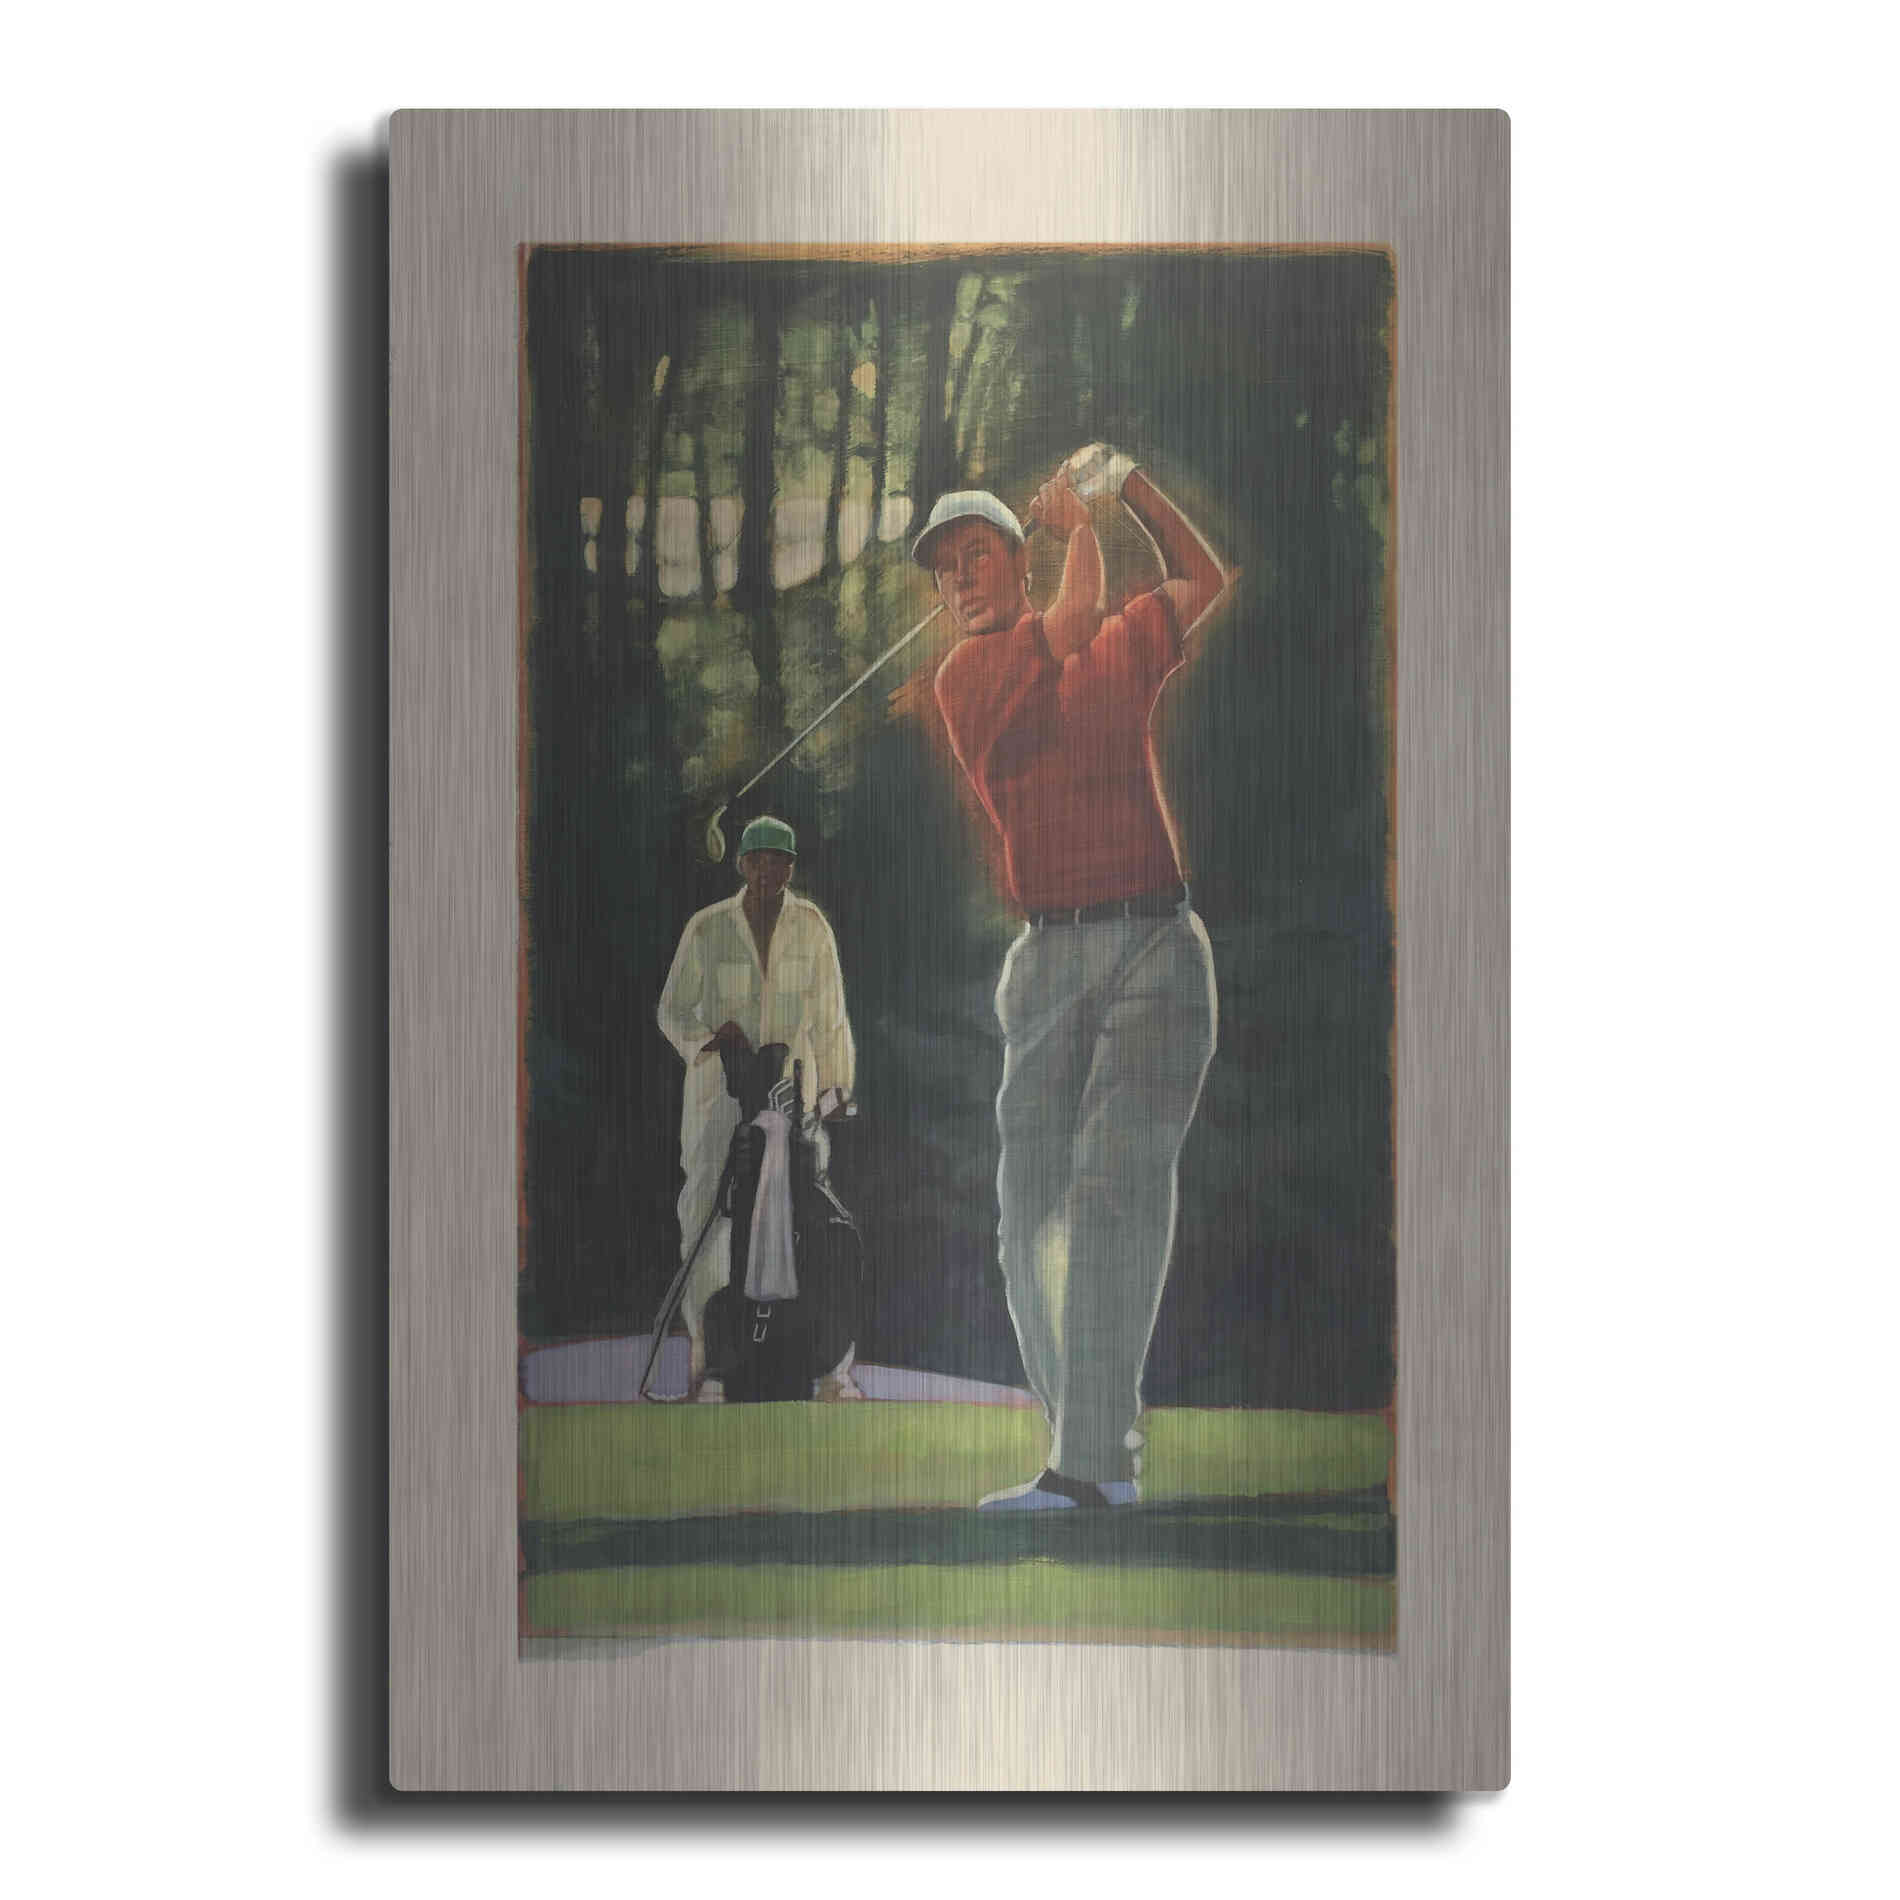 Luxe Metal Art 'The Golfer' by Bruce Dean, Metal Wall Art